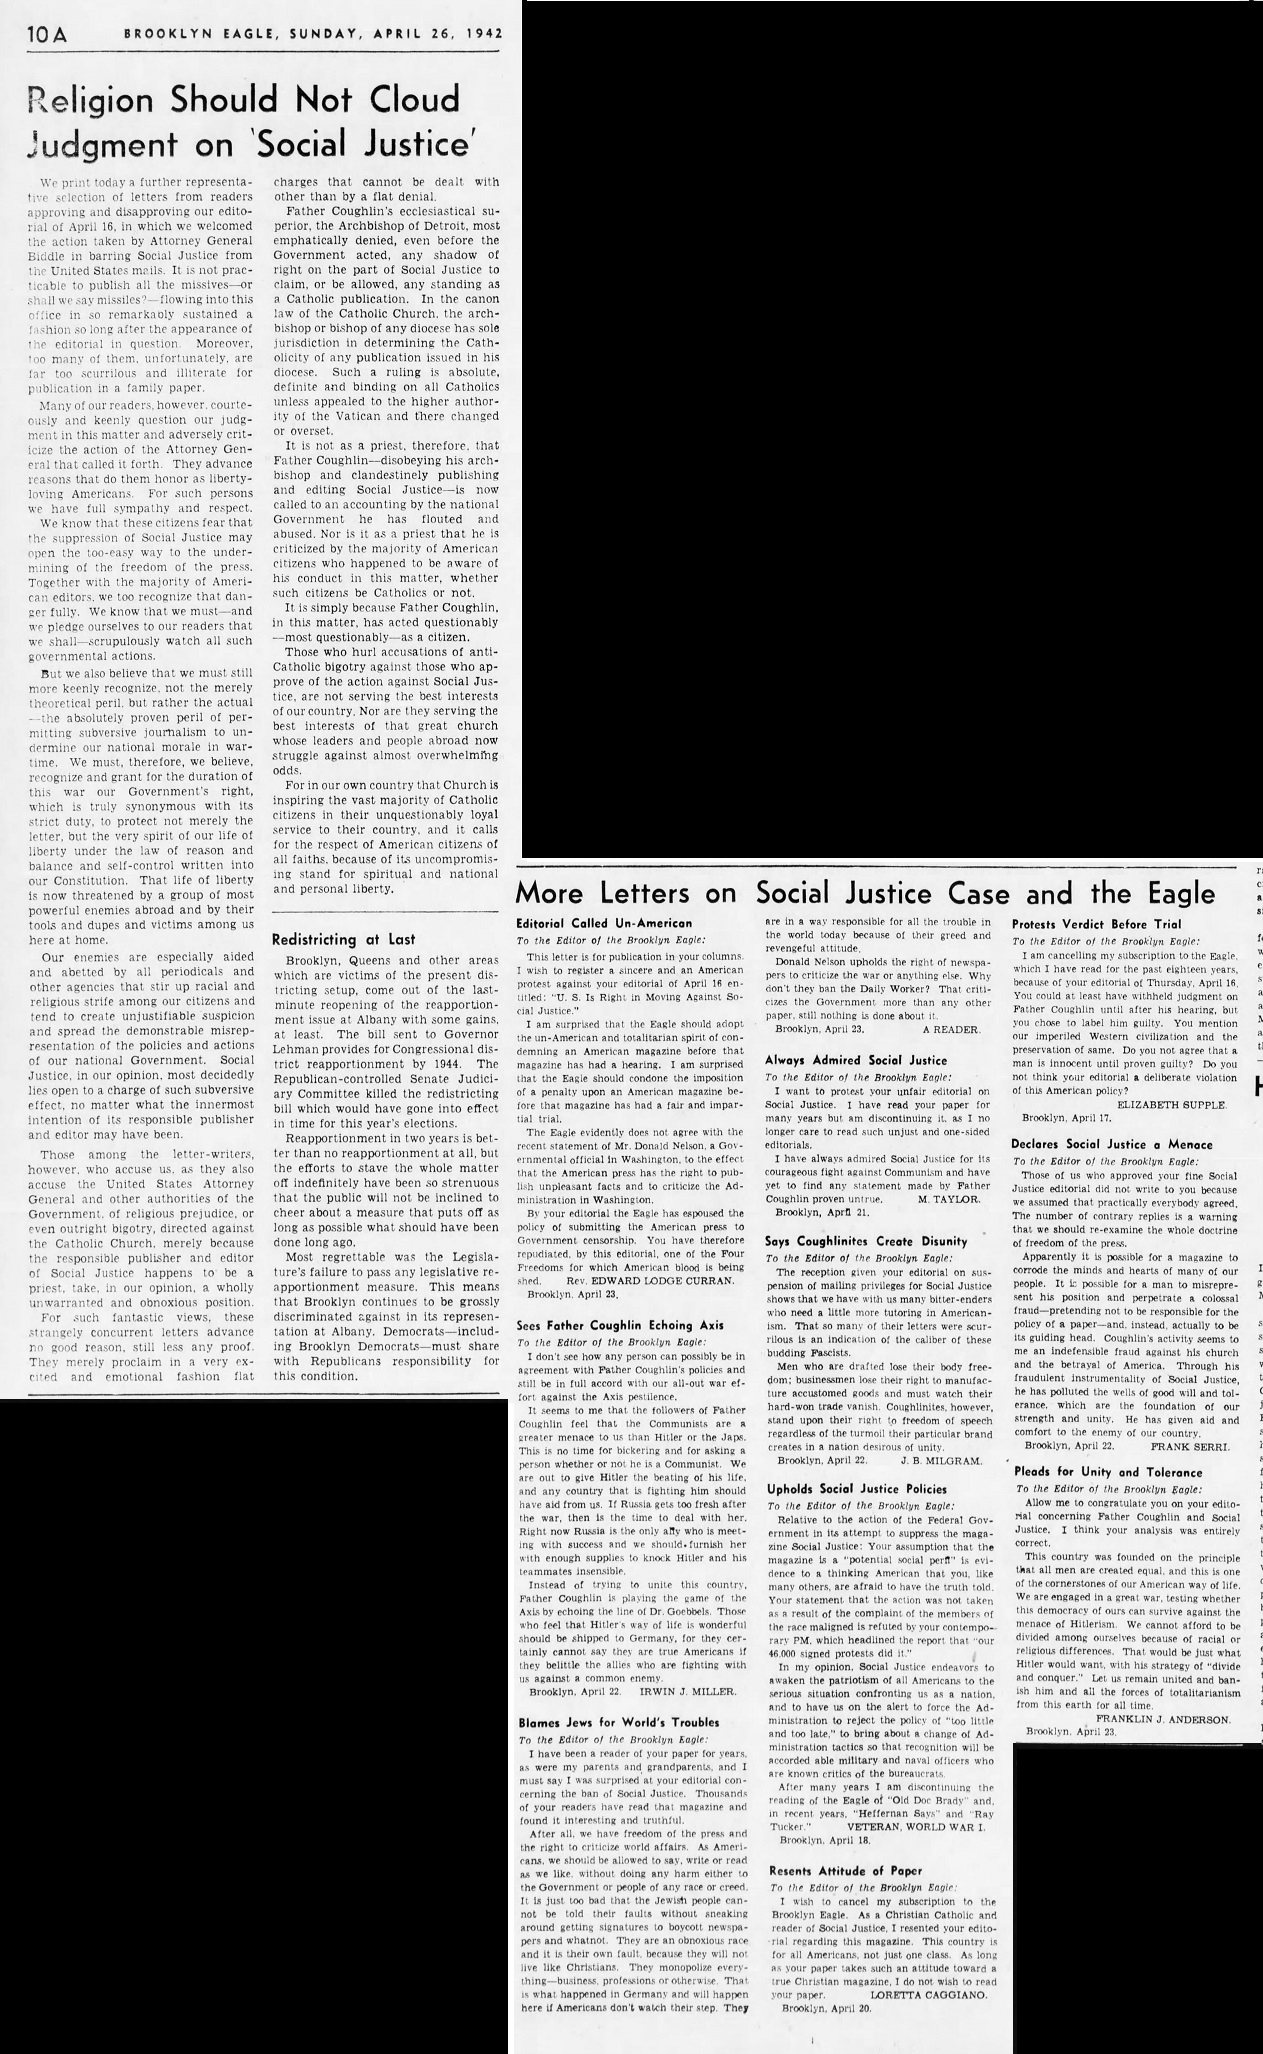 The_Brooklyn_Daily_Eagle_Sun__Apr_26__1942_(1).jpg